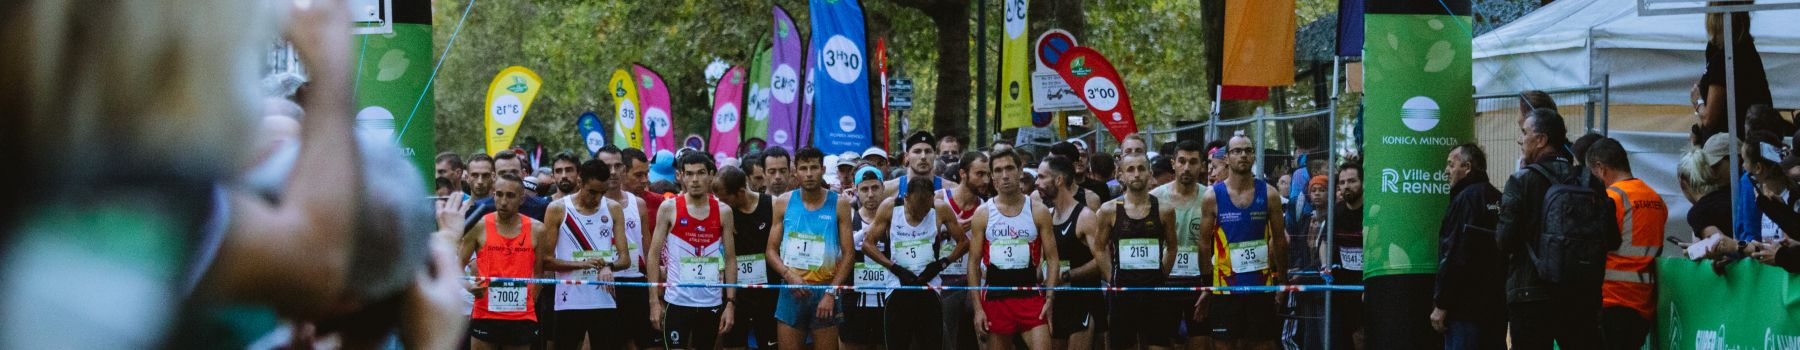 Le Marathon Vert Rennes School of Business : un running engagé